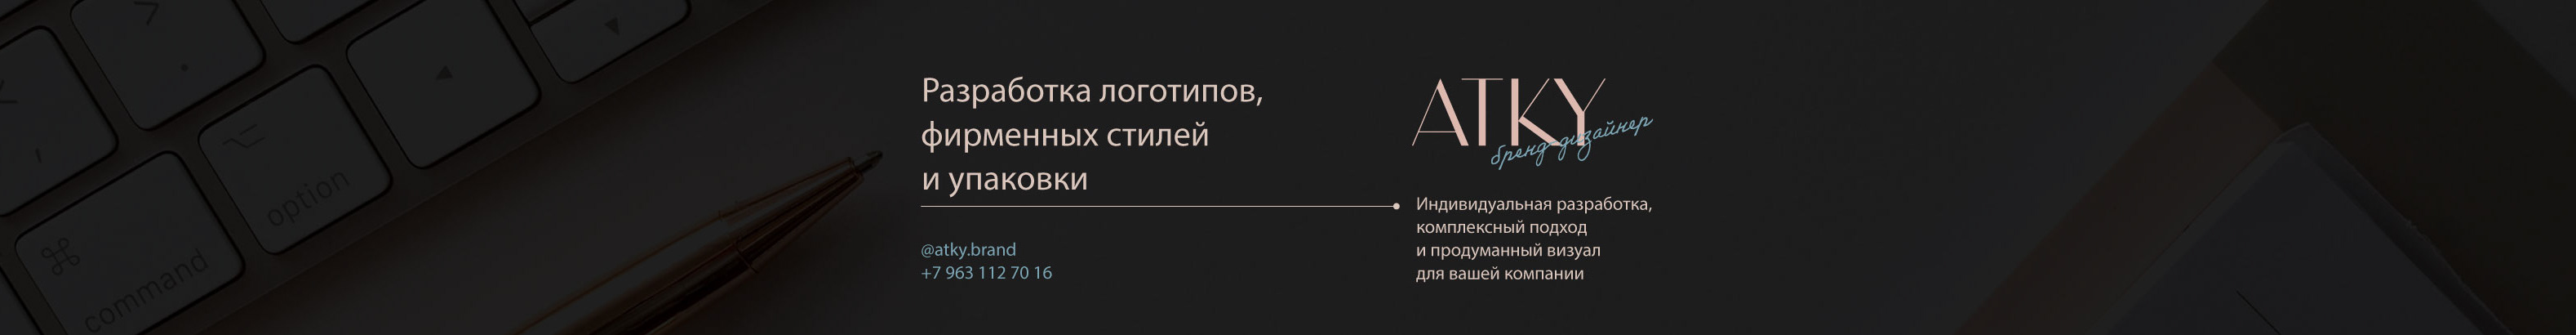 Profil-Banner von Татьяна Кунтуганова